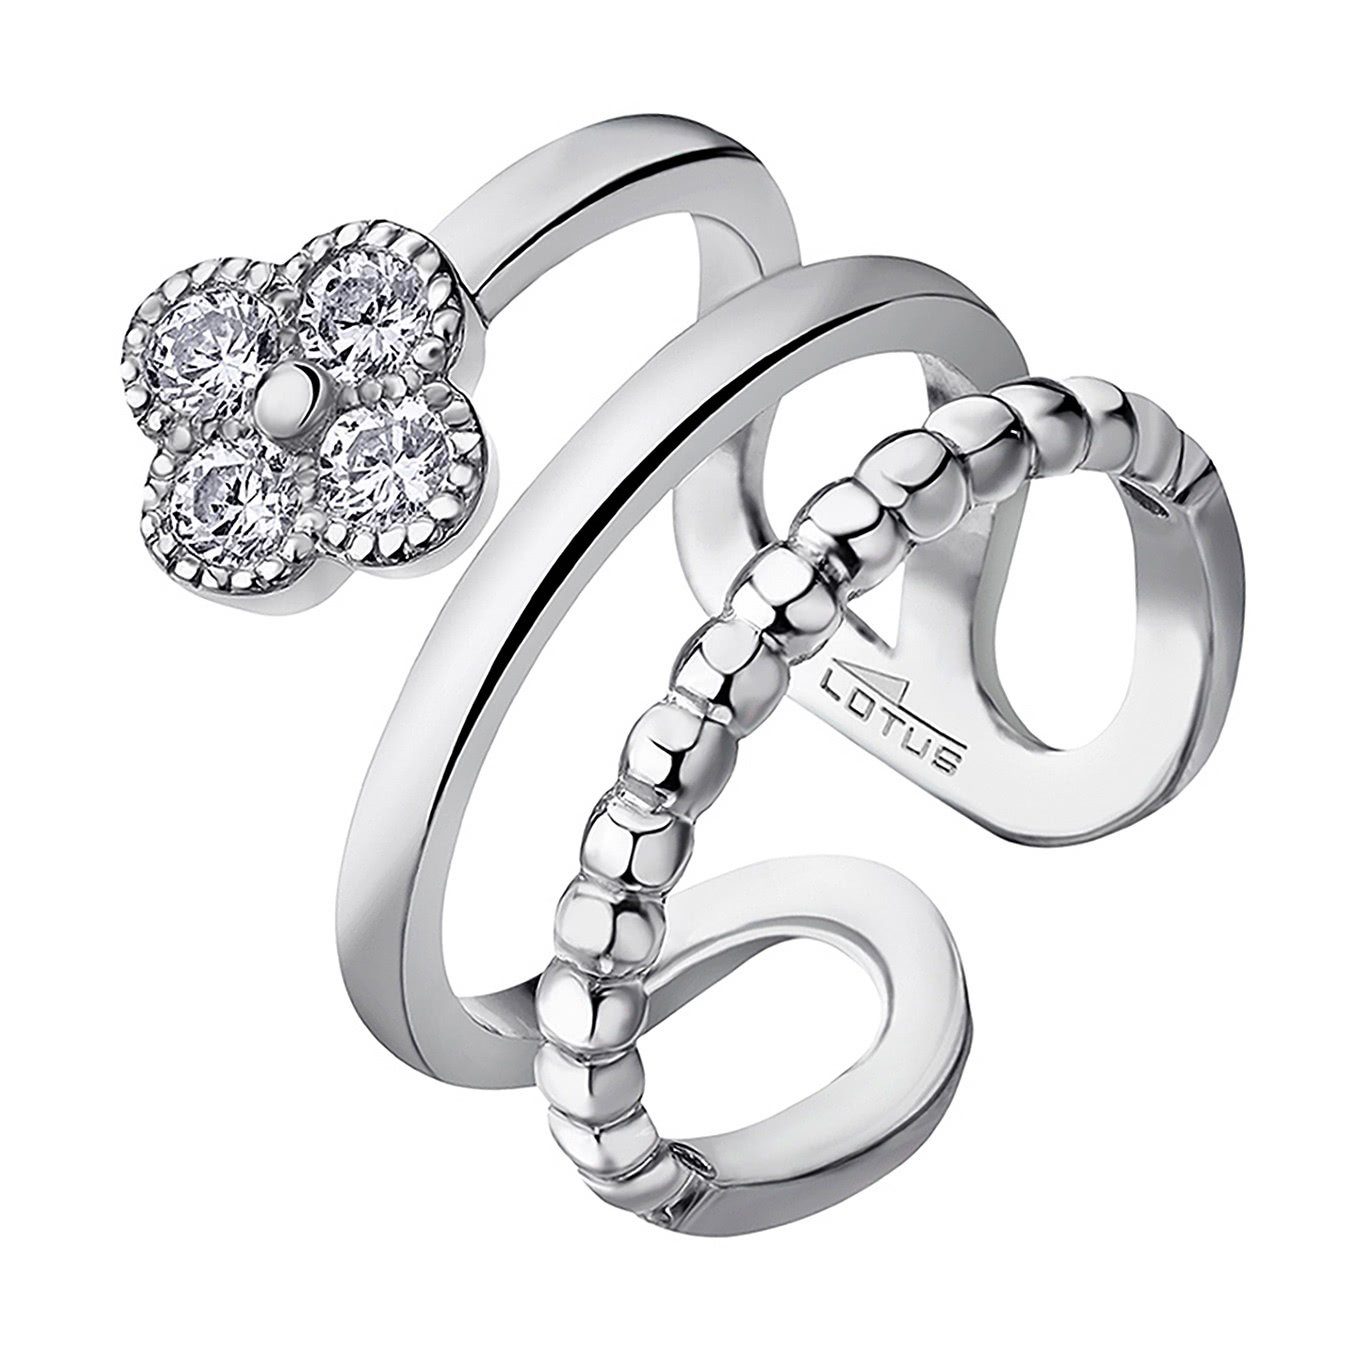 LOTUS SILVER Silberring Lotus Silver Blume Ring LP1612-3/1 (Fingerring), Ringe für Damen 925 Sterling Silber, silber, weiß